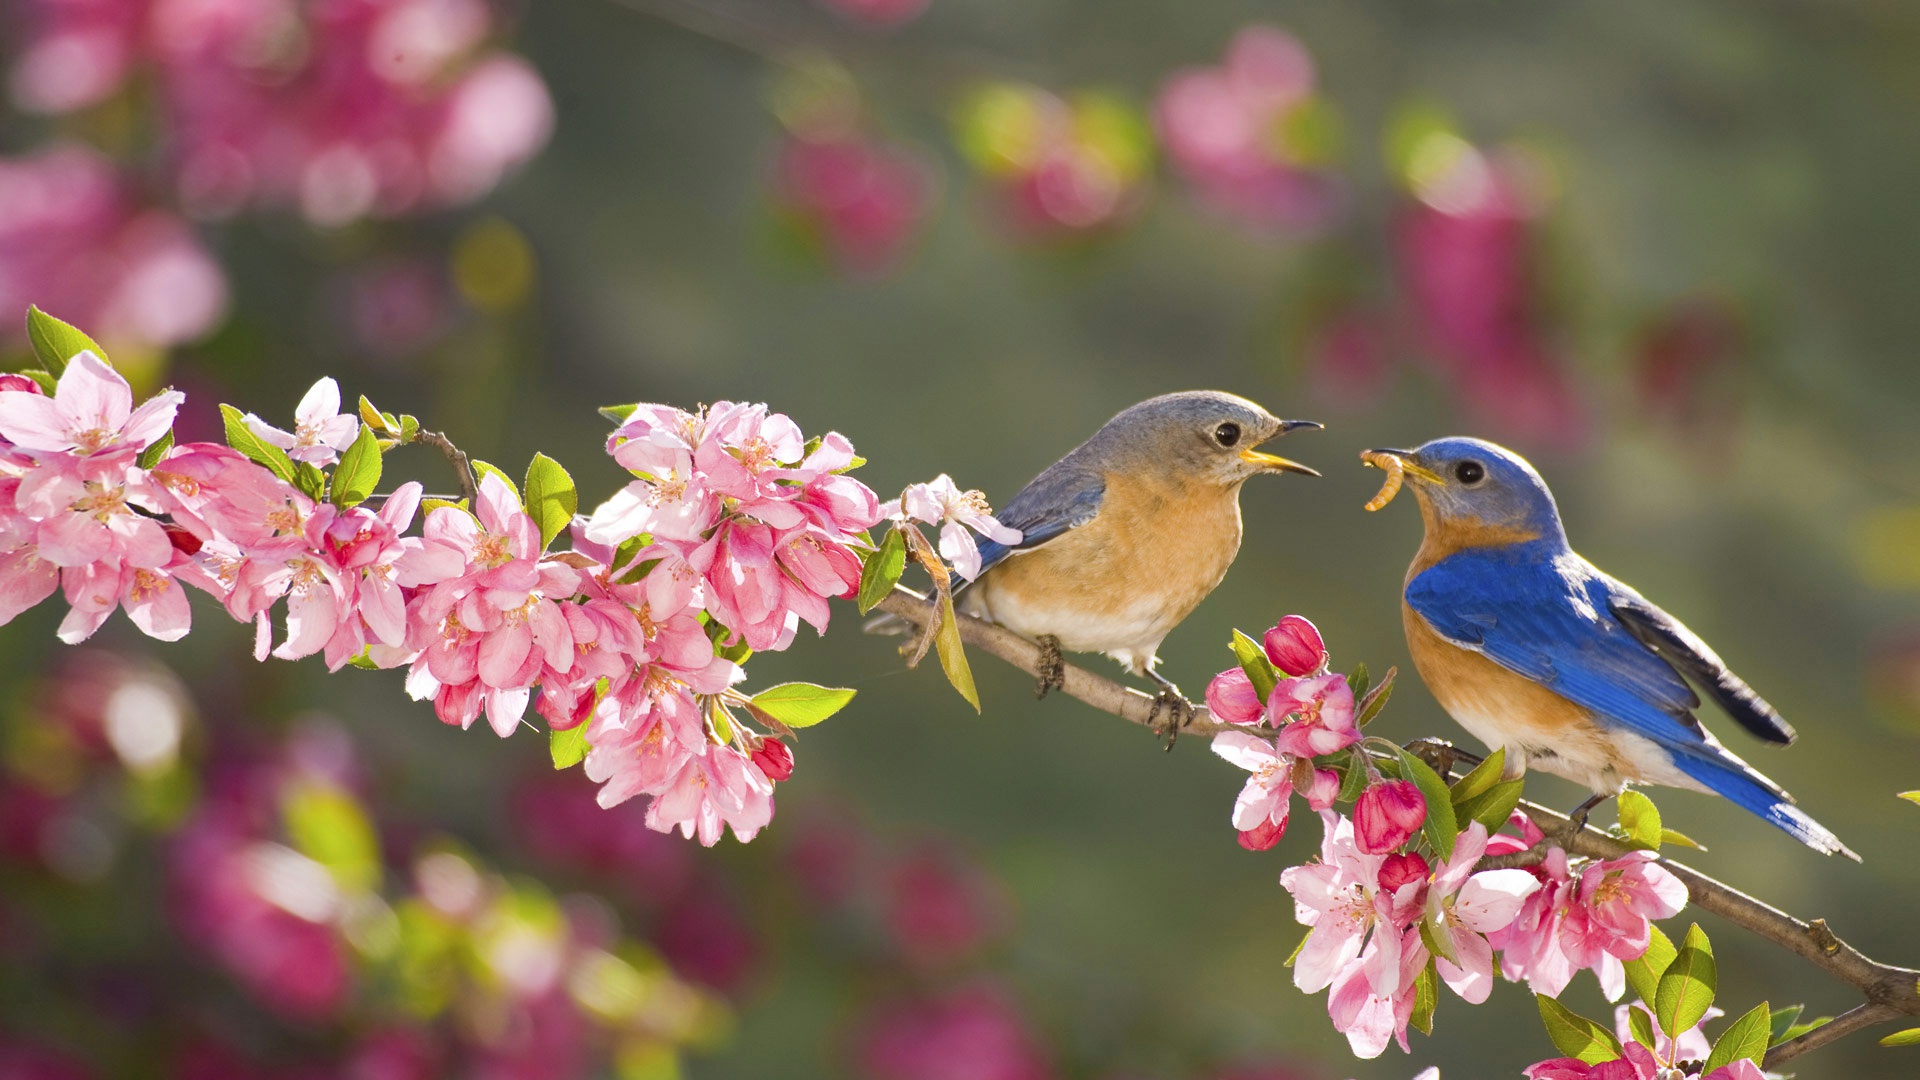 410835 descargar imagen primavera, animales, azulejo, ave, florecer, rama, paseriformes, flor rosa, aves: fondos de pantalla y protectores de pantalla gratis